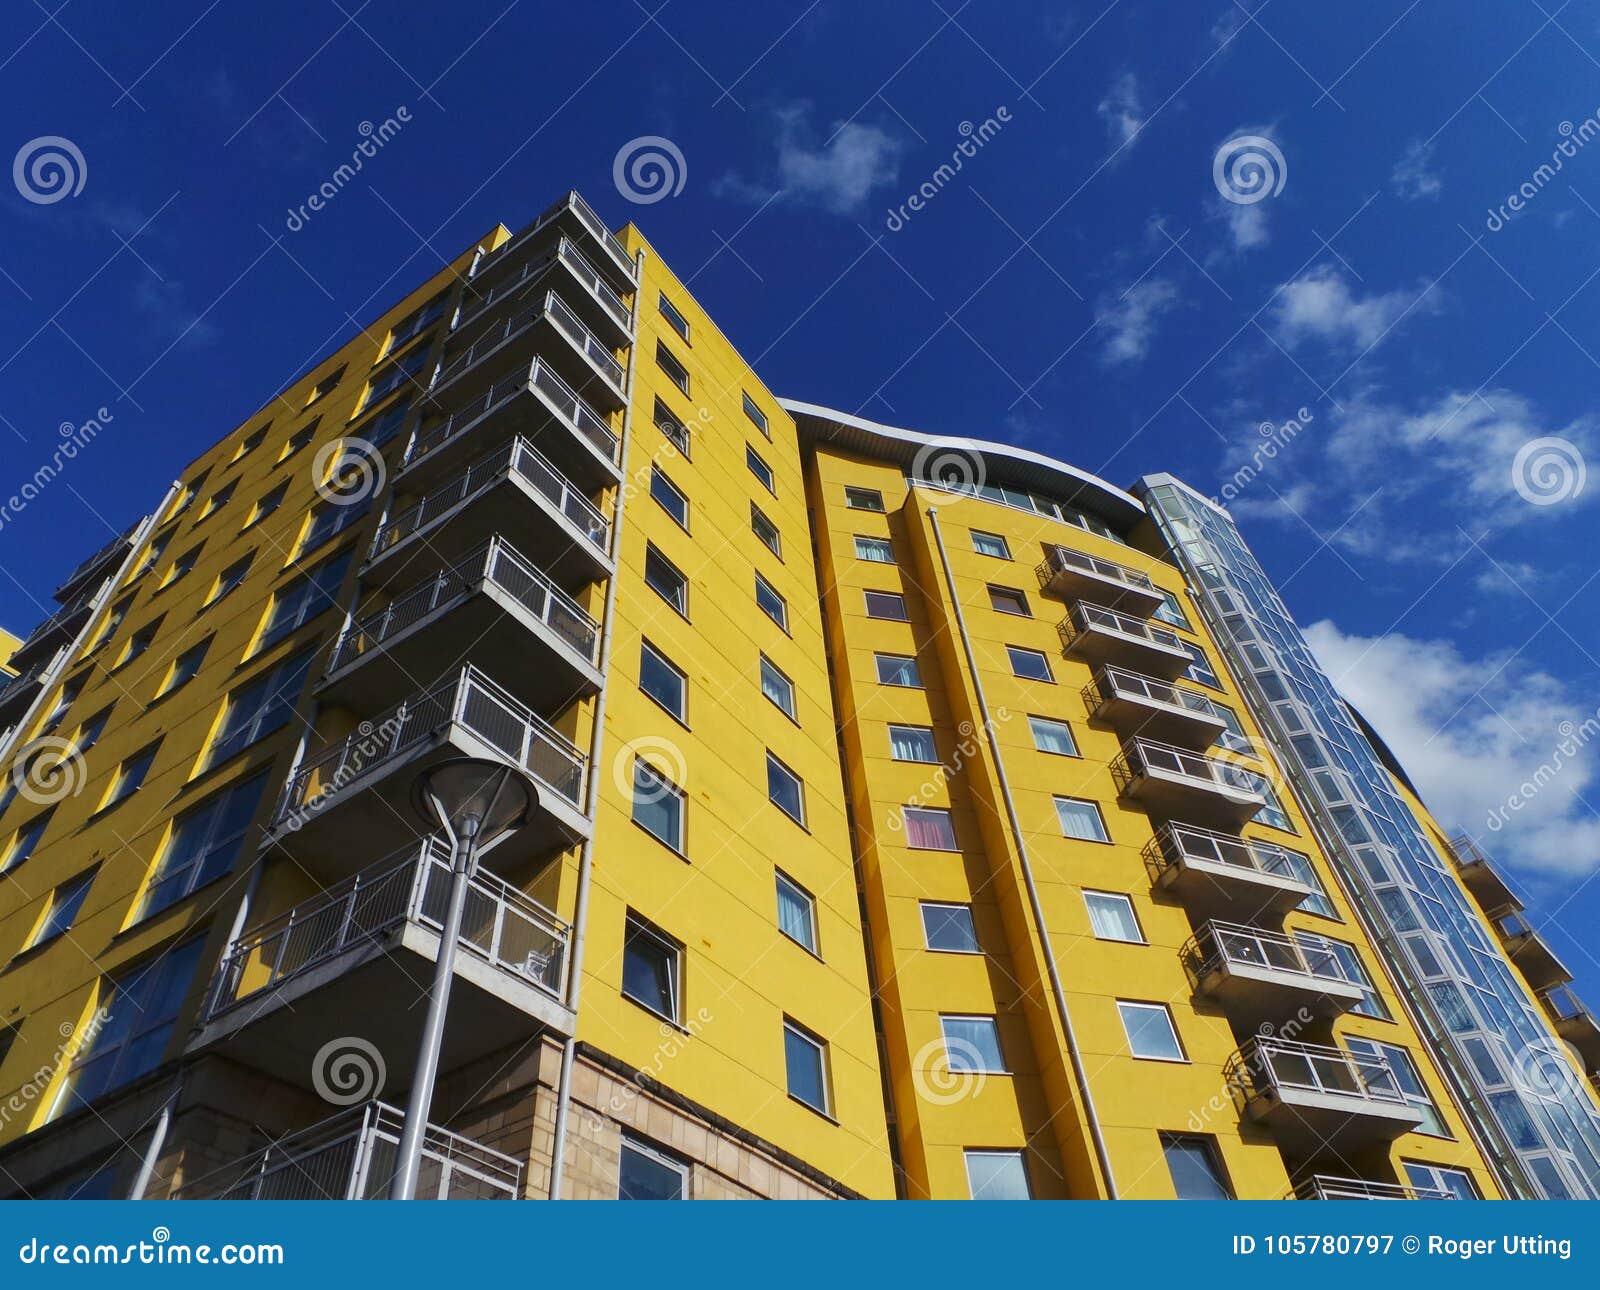 bright yellow flats